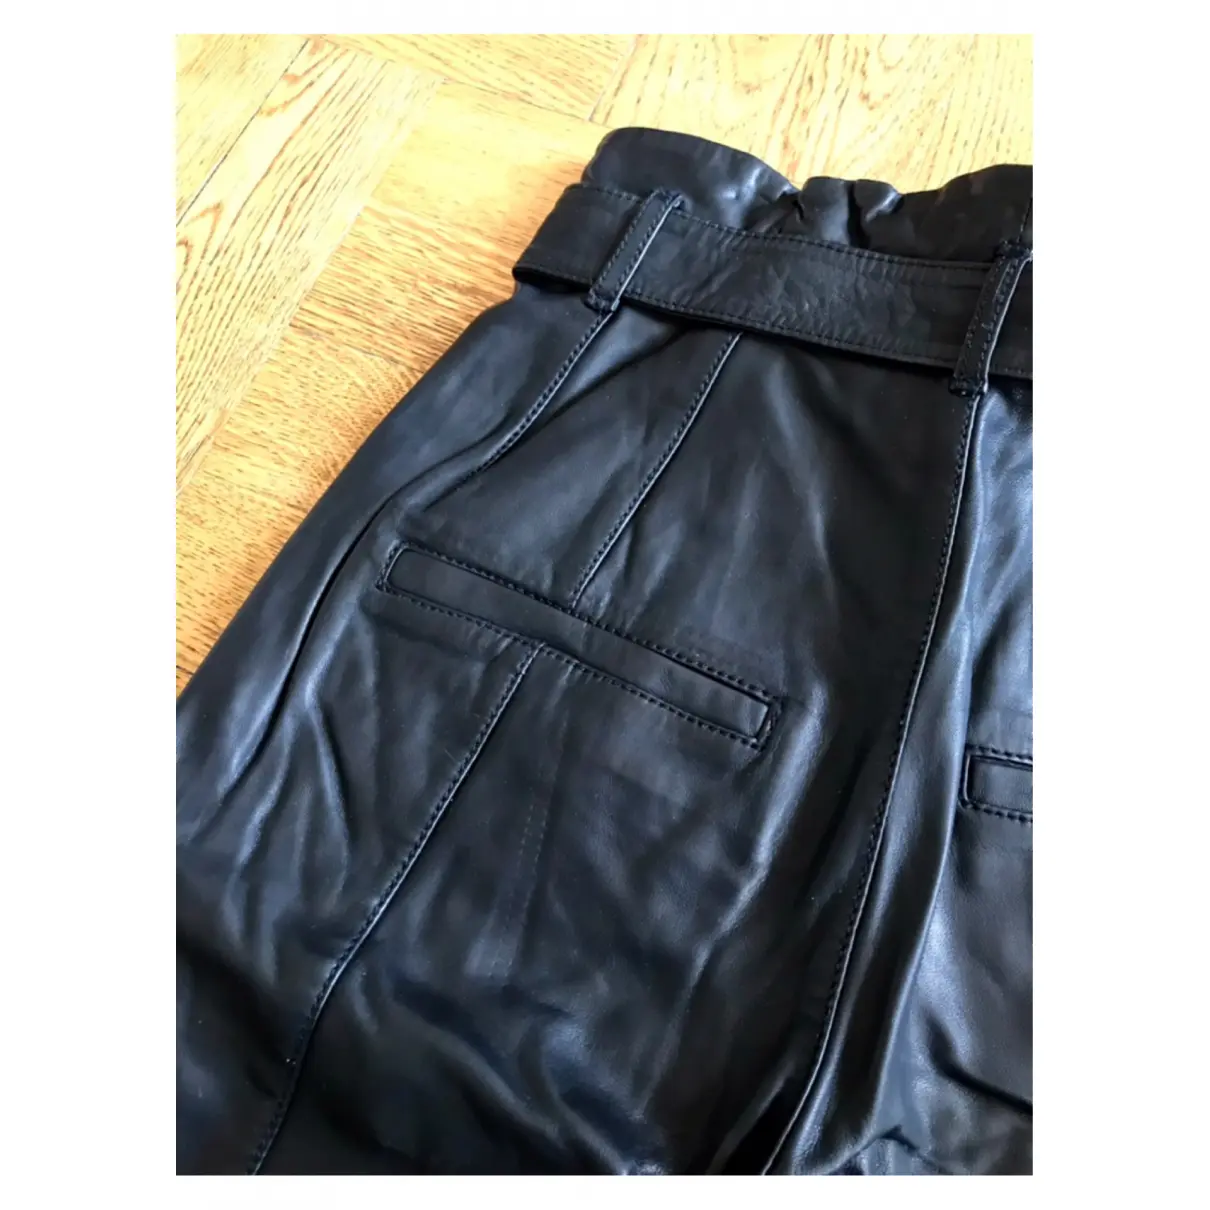 Leather trousers Marissa Webb